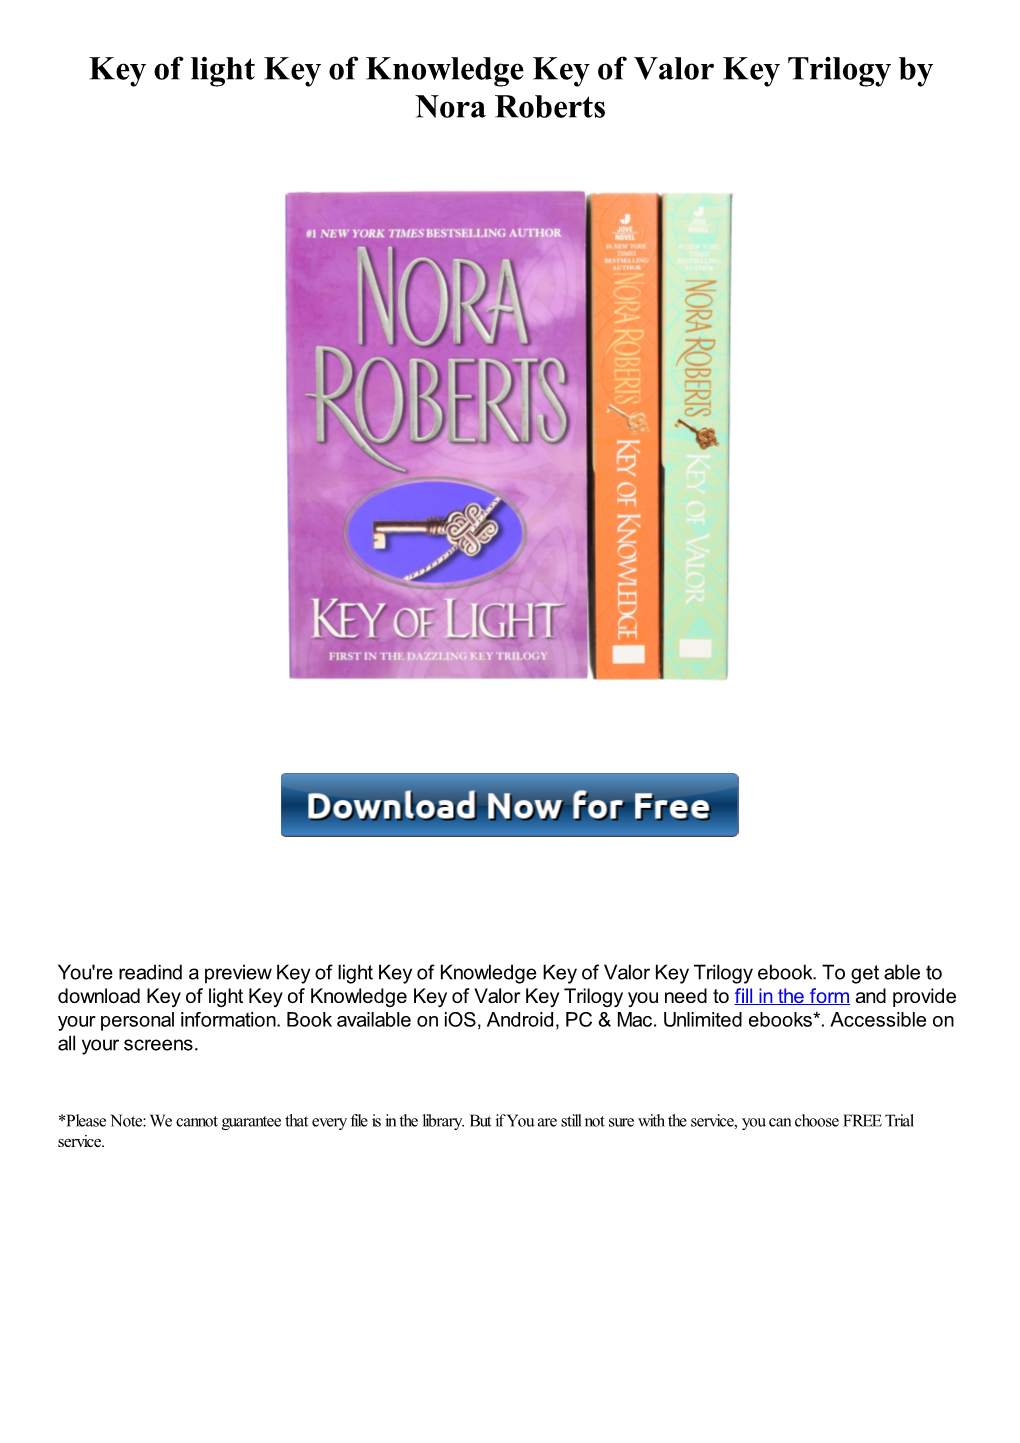 Key of Light Key of Knowledge Key of Valor Key Trilogy by Nora Roberts